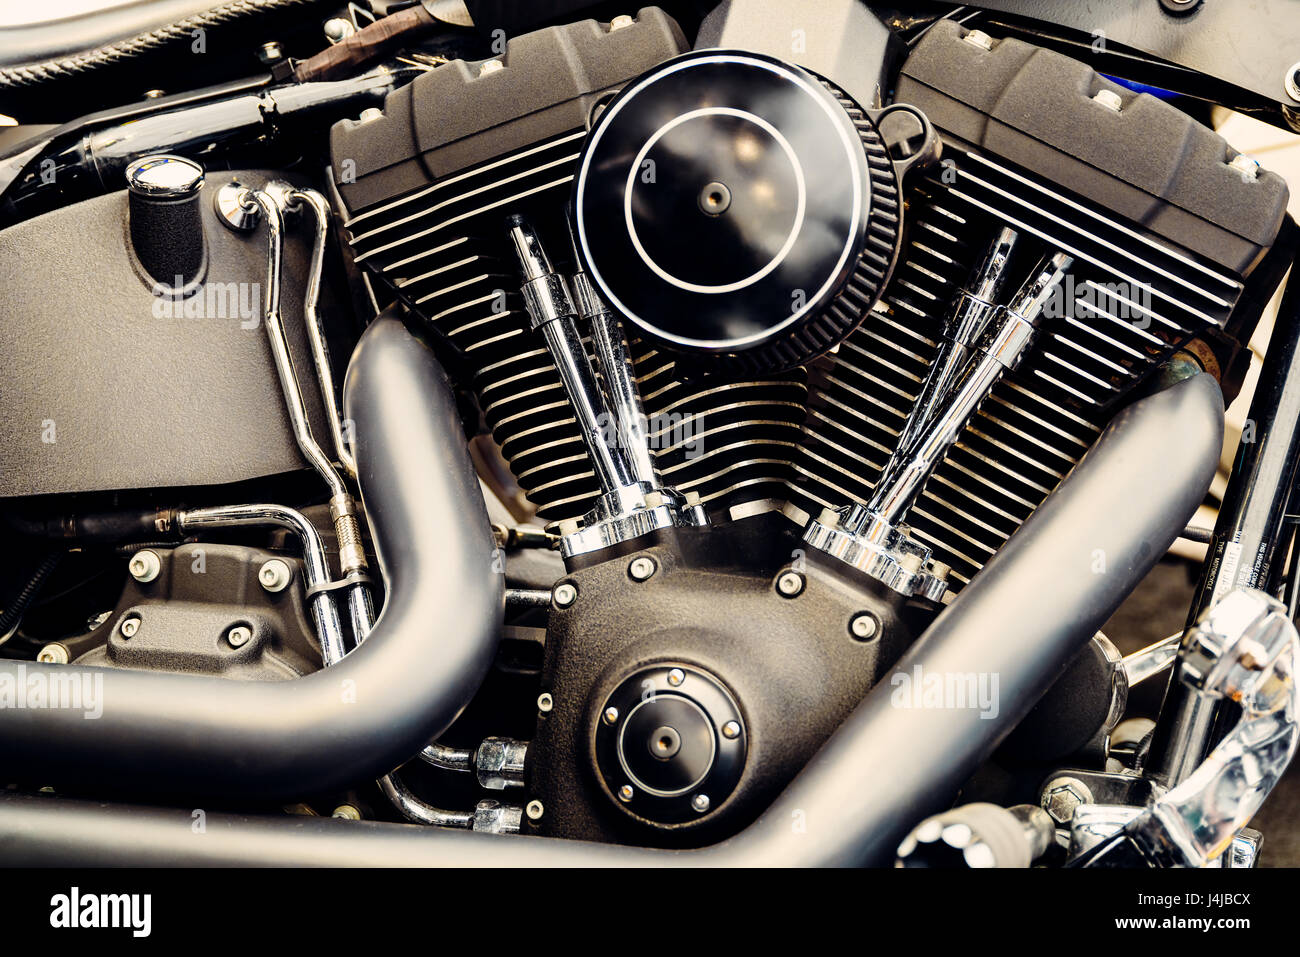 Motorcycle Chrome Engine Block Closeup Stock Photo